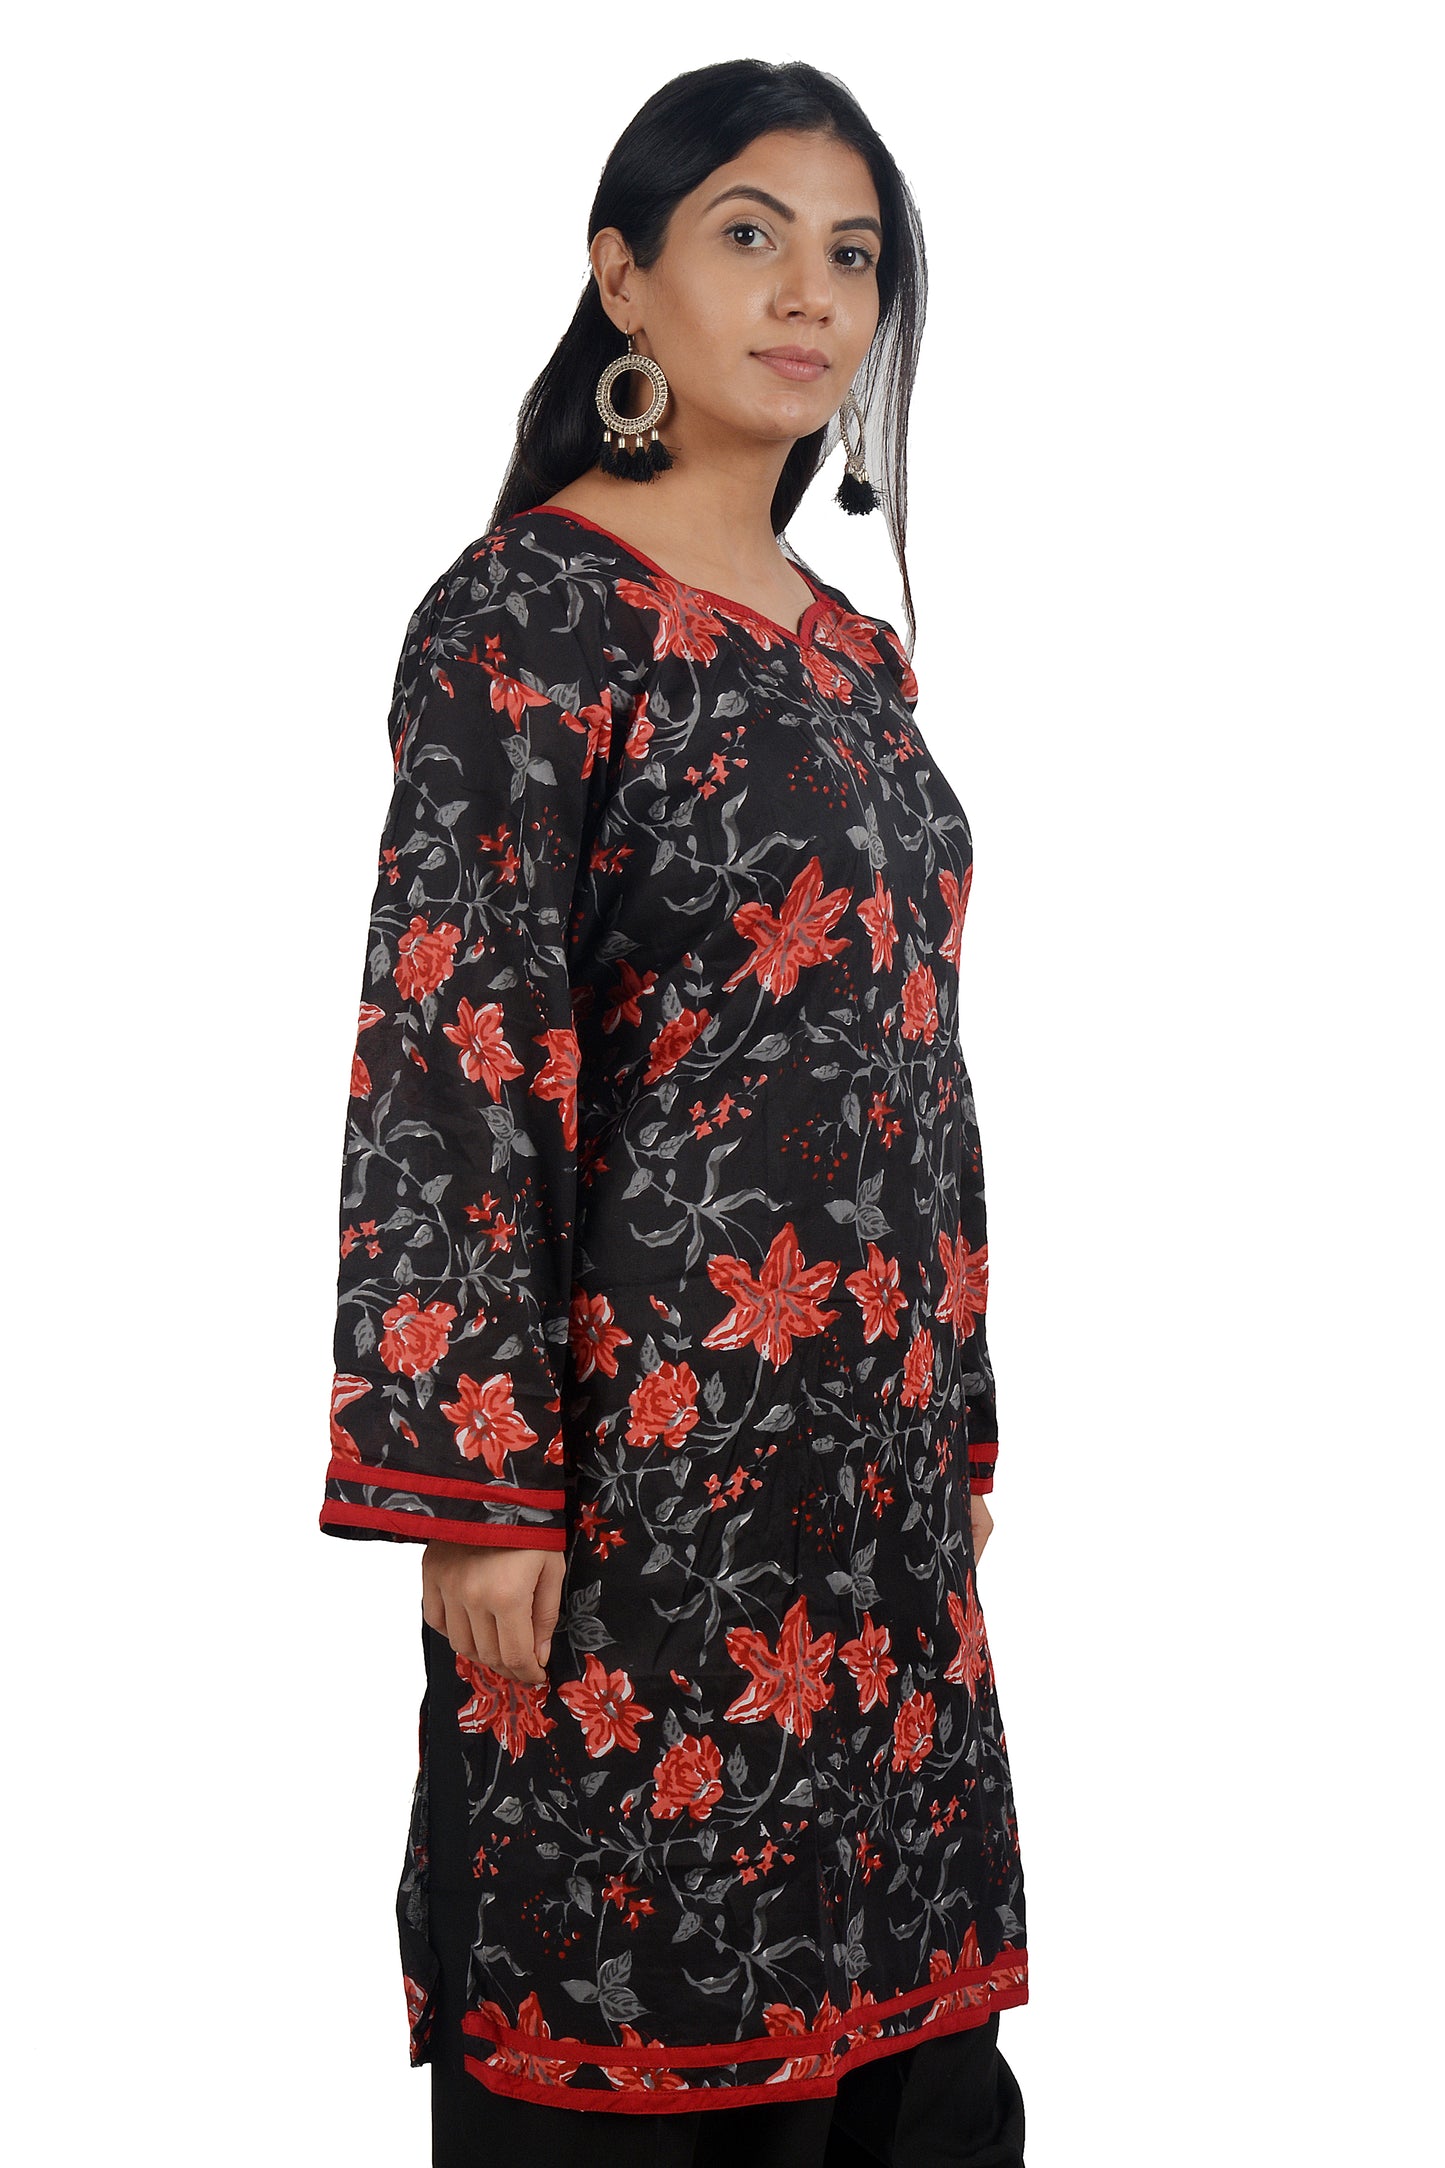 Red Black Cotton Salwar kameez Dress Plus Size 52 Full Sleeves